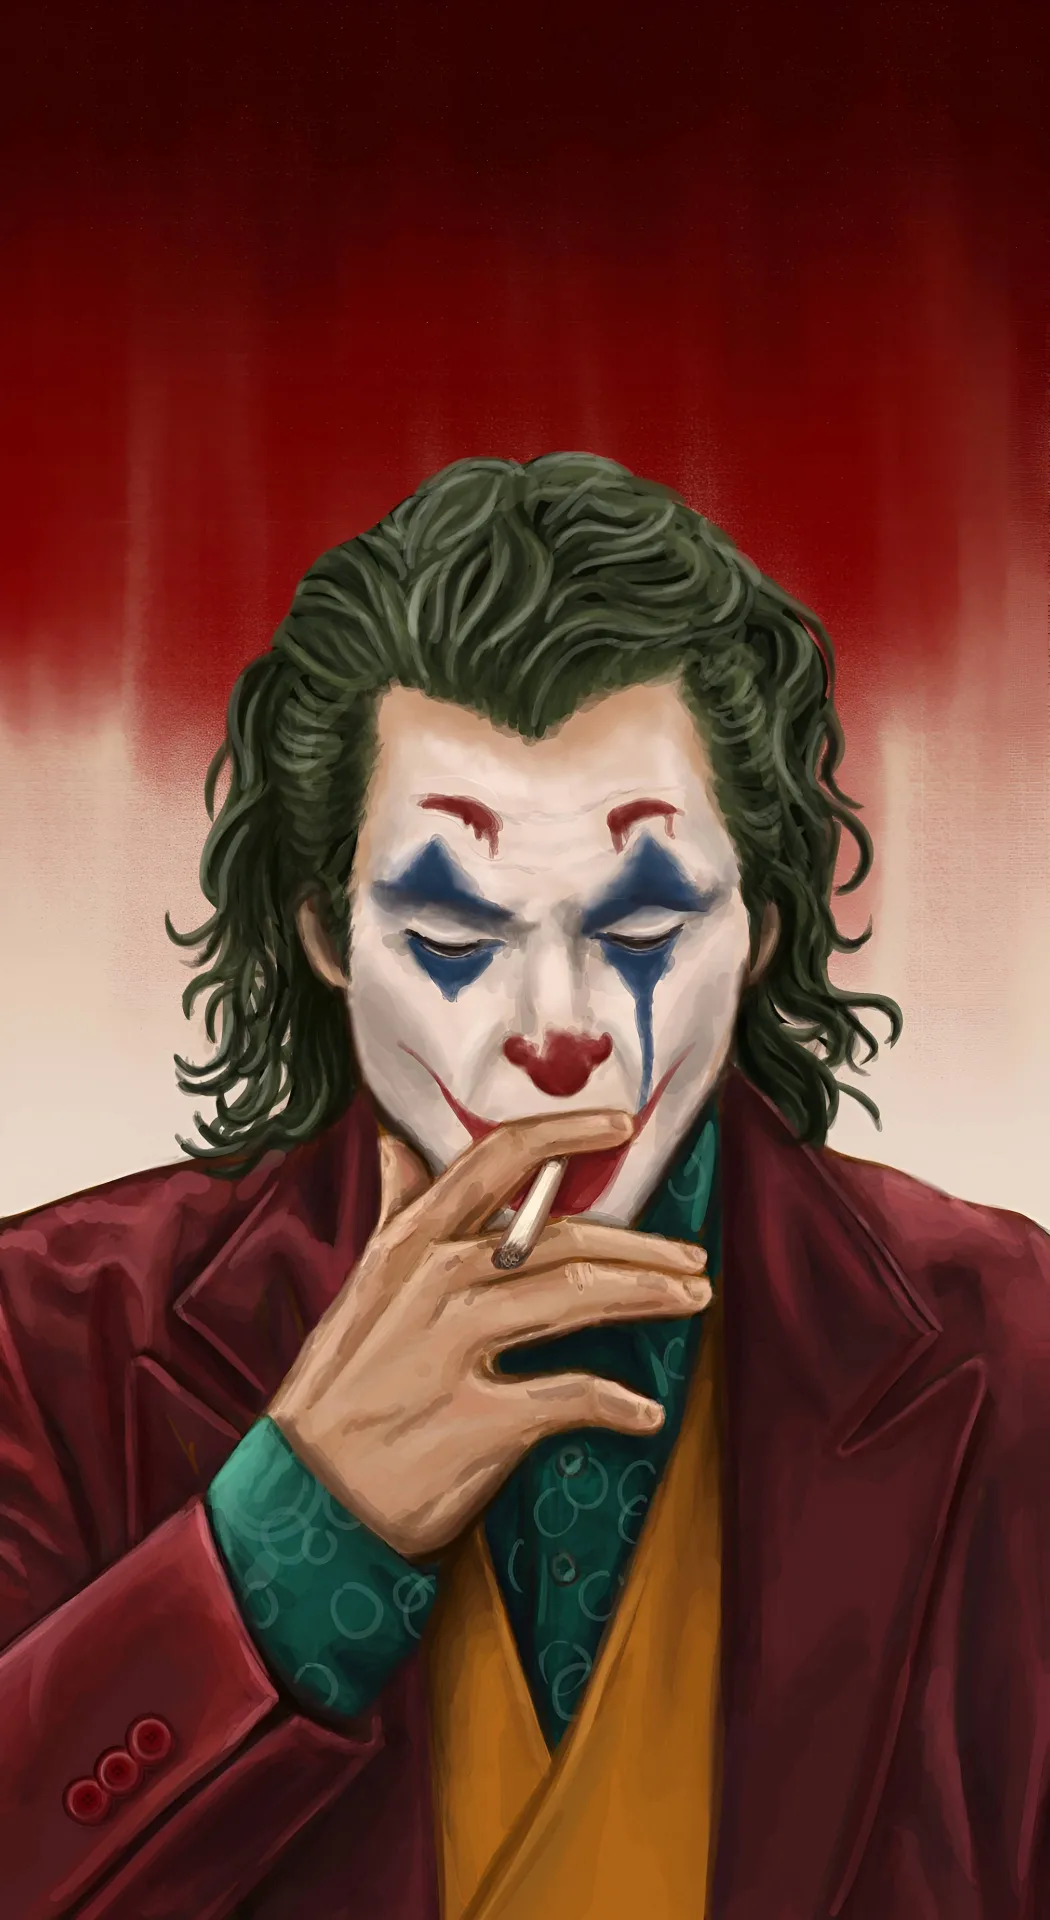 thumb for Joker Smoking Wallpaper